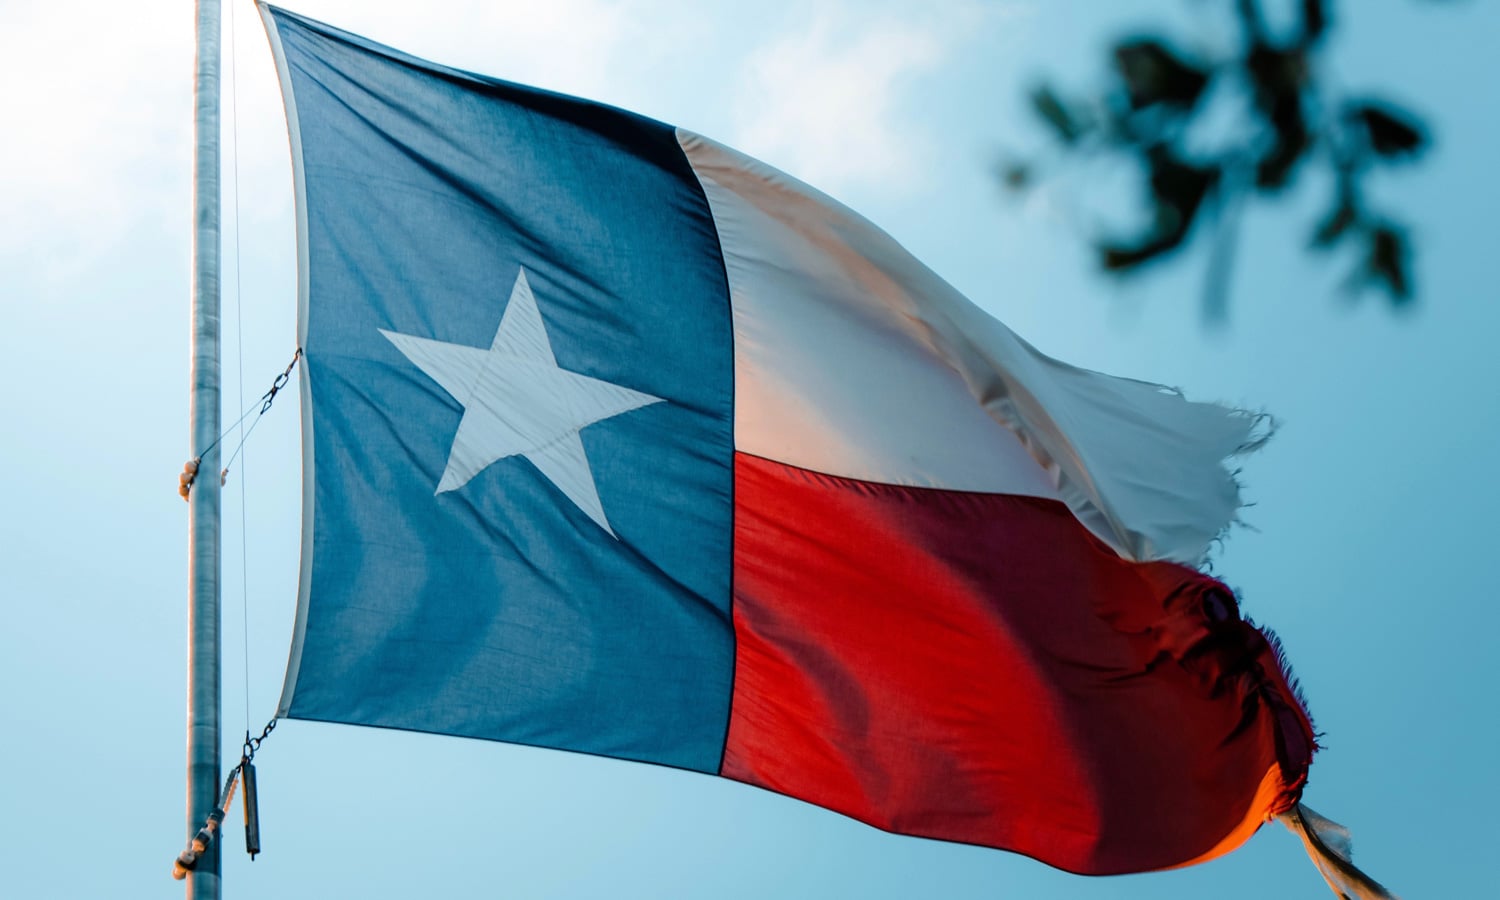 Marijuana Would Save Texas Economy, House Speaker Admits, But He Won't Pursue It